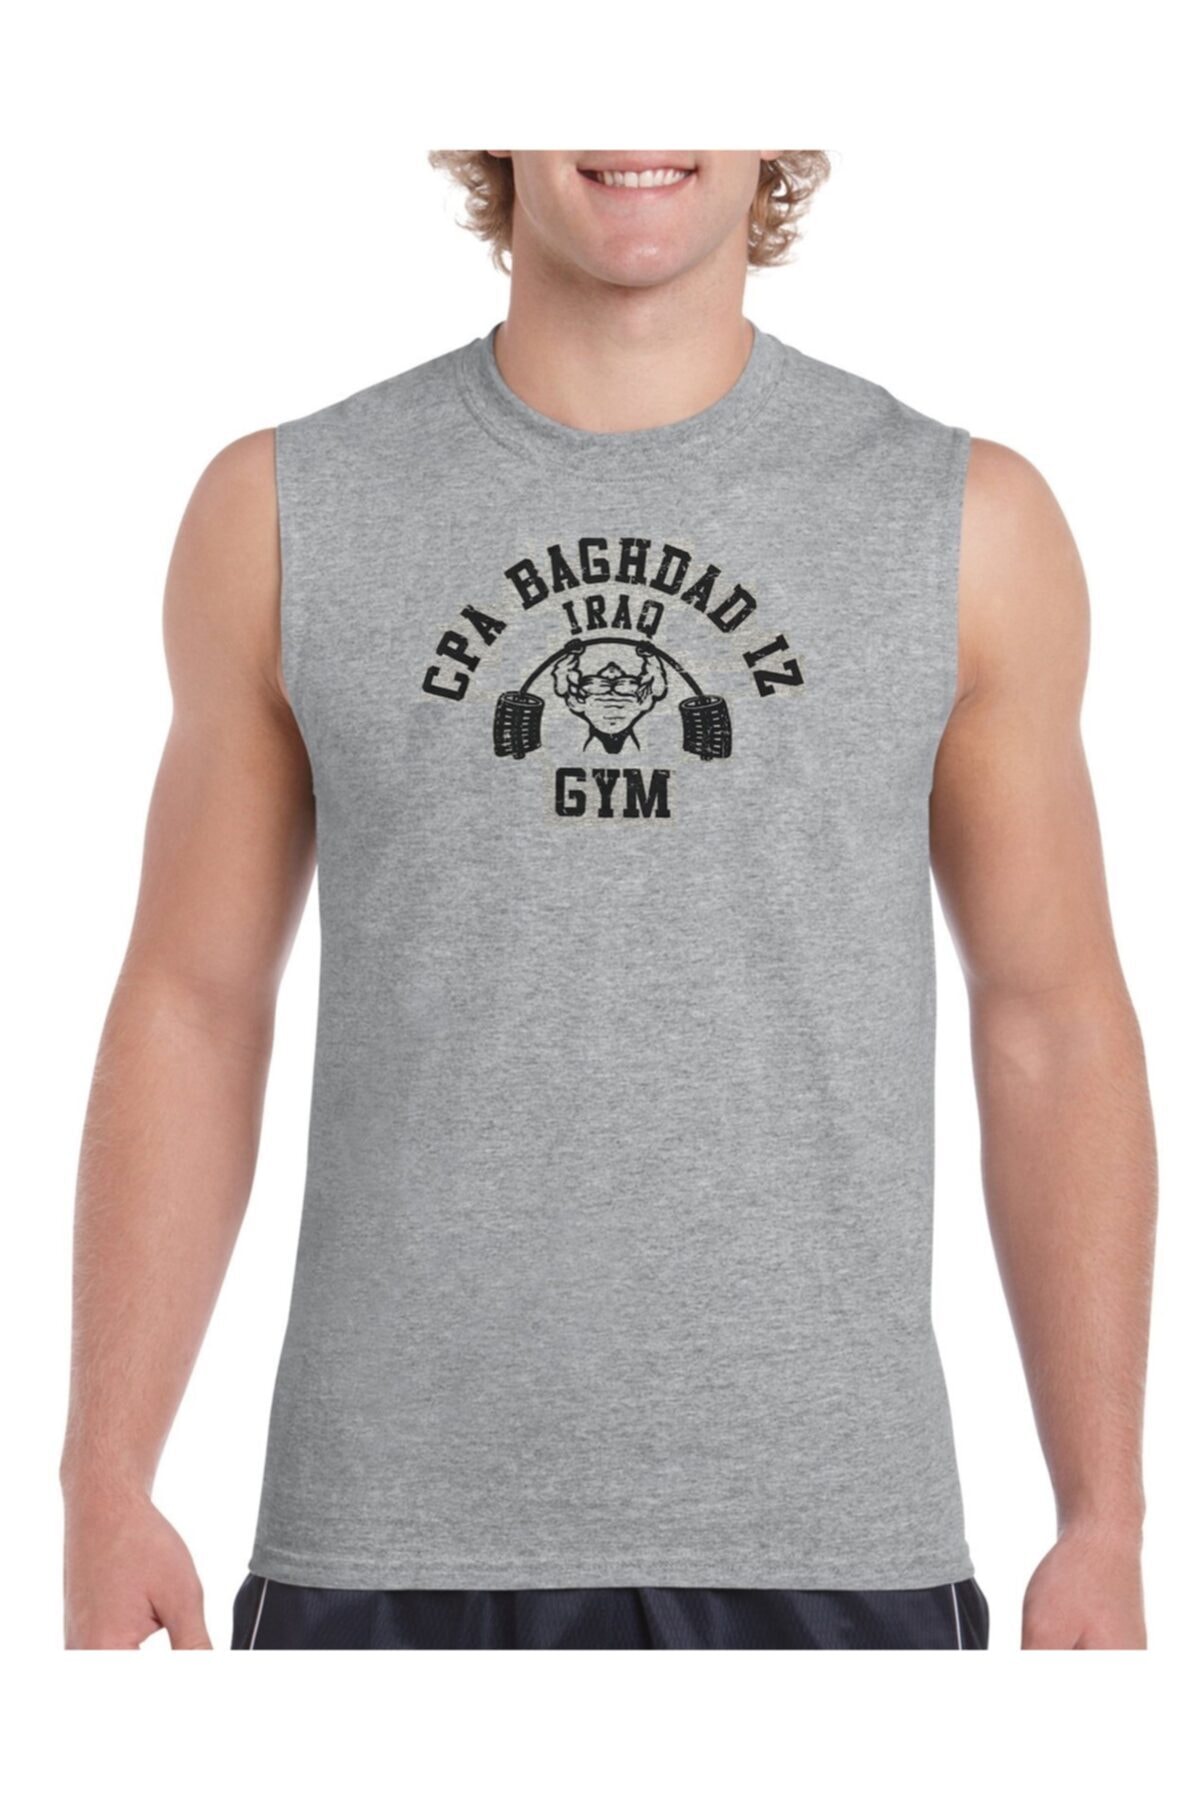 U.S Army Anvil Fitness Gym Cotton Sleeveless Cpa T-shirt